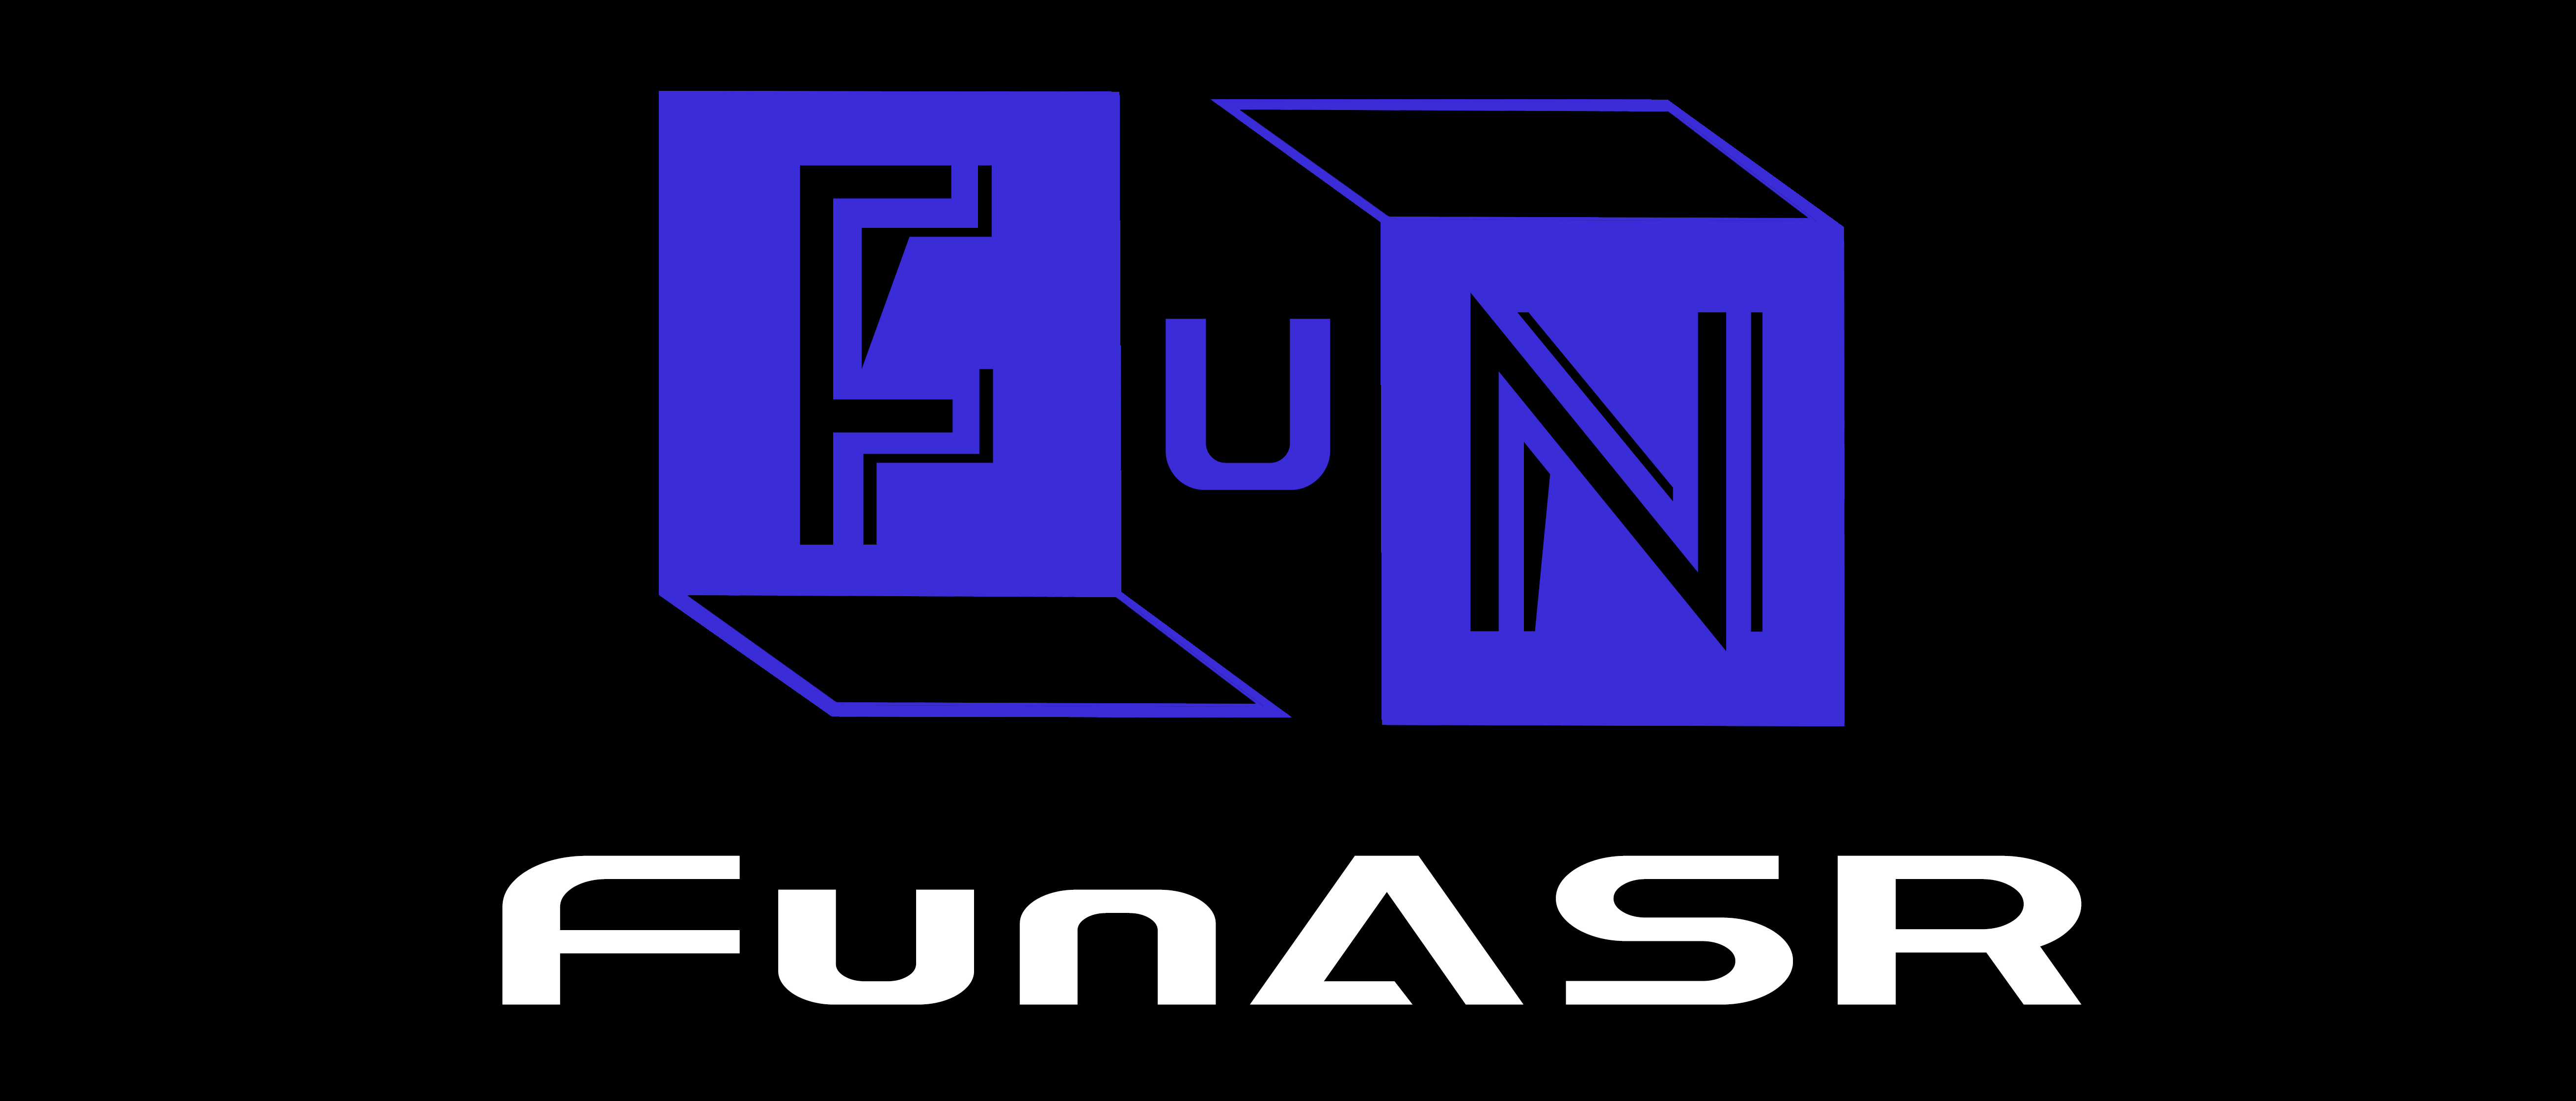 _images/funasr_logo.jpg